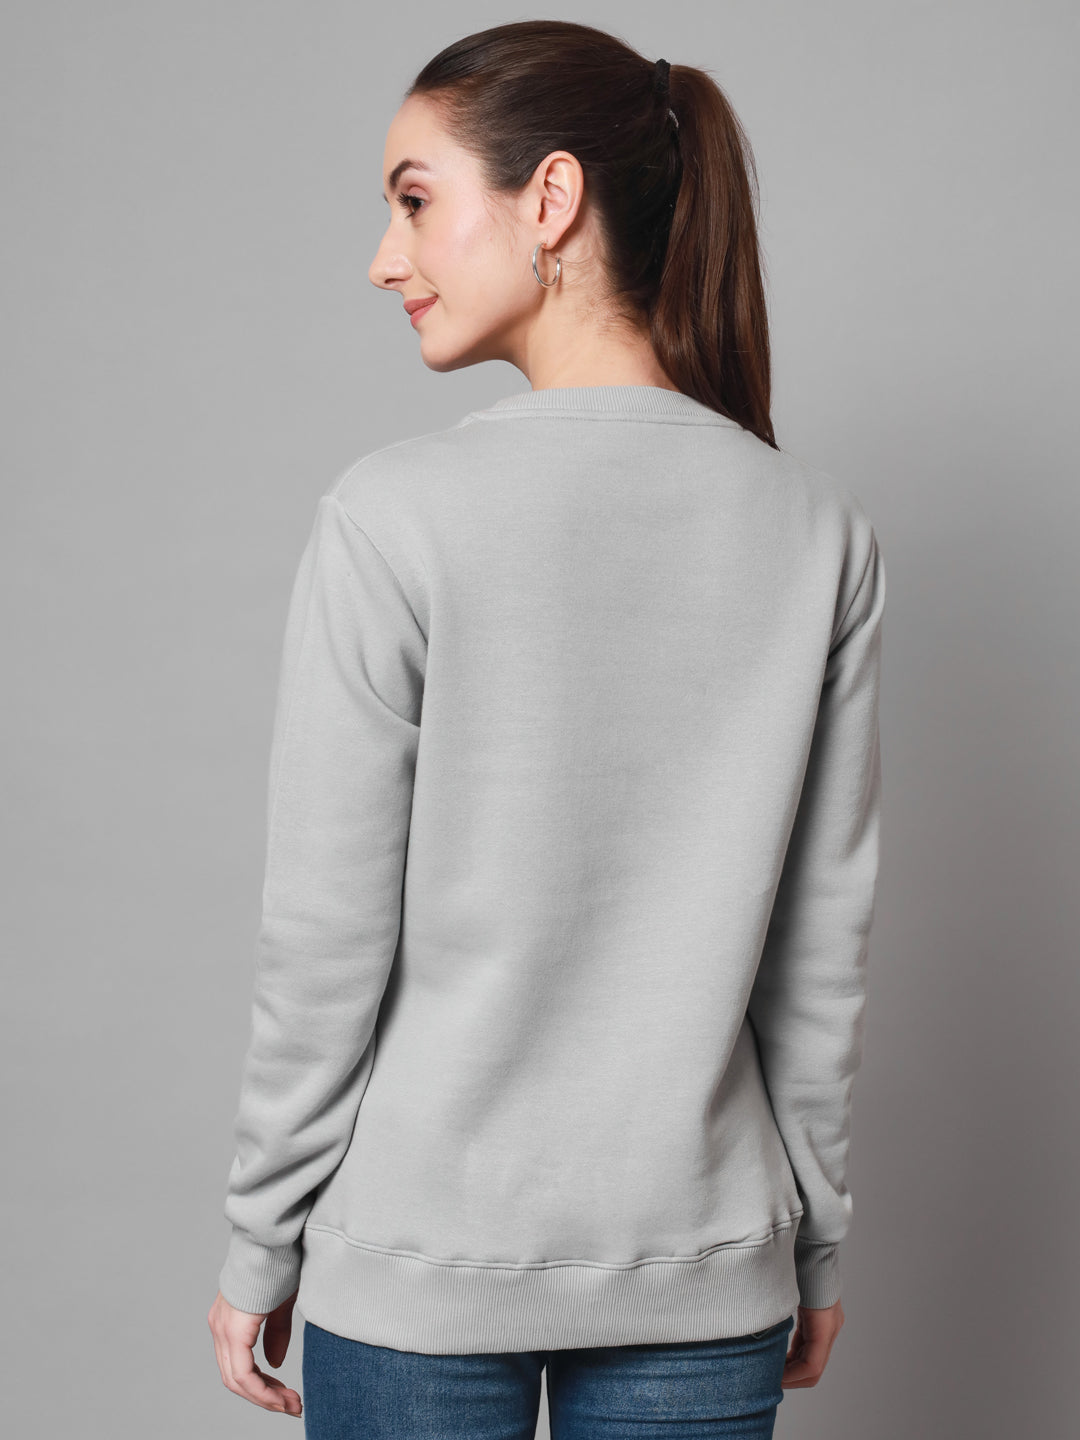 Griffel Women’s Printed Round Neck Steel Grey Cotton Fleece Full Sleeve Sweatshirt - griffel